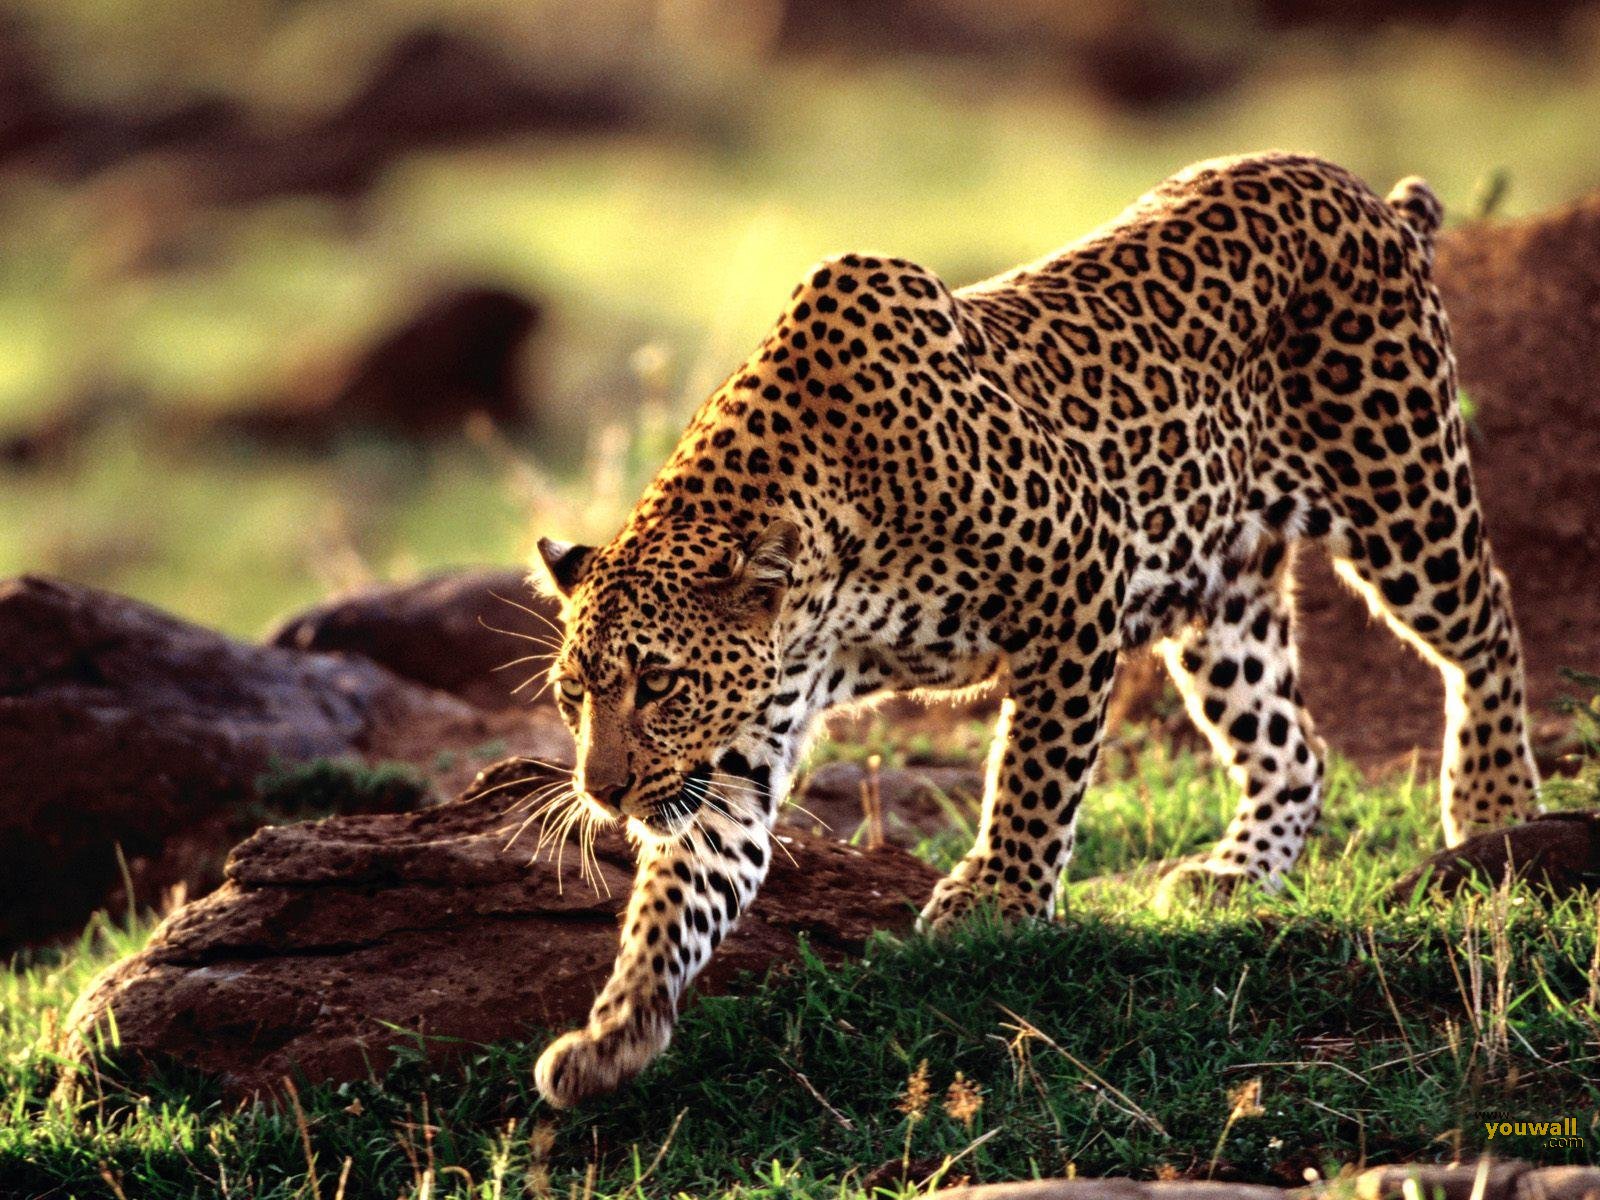 Leopard stalking through a vibrant jungle